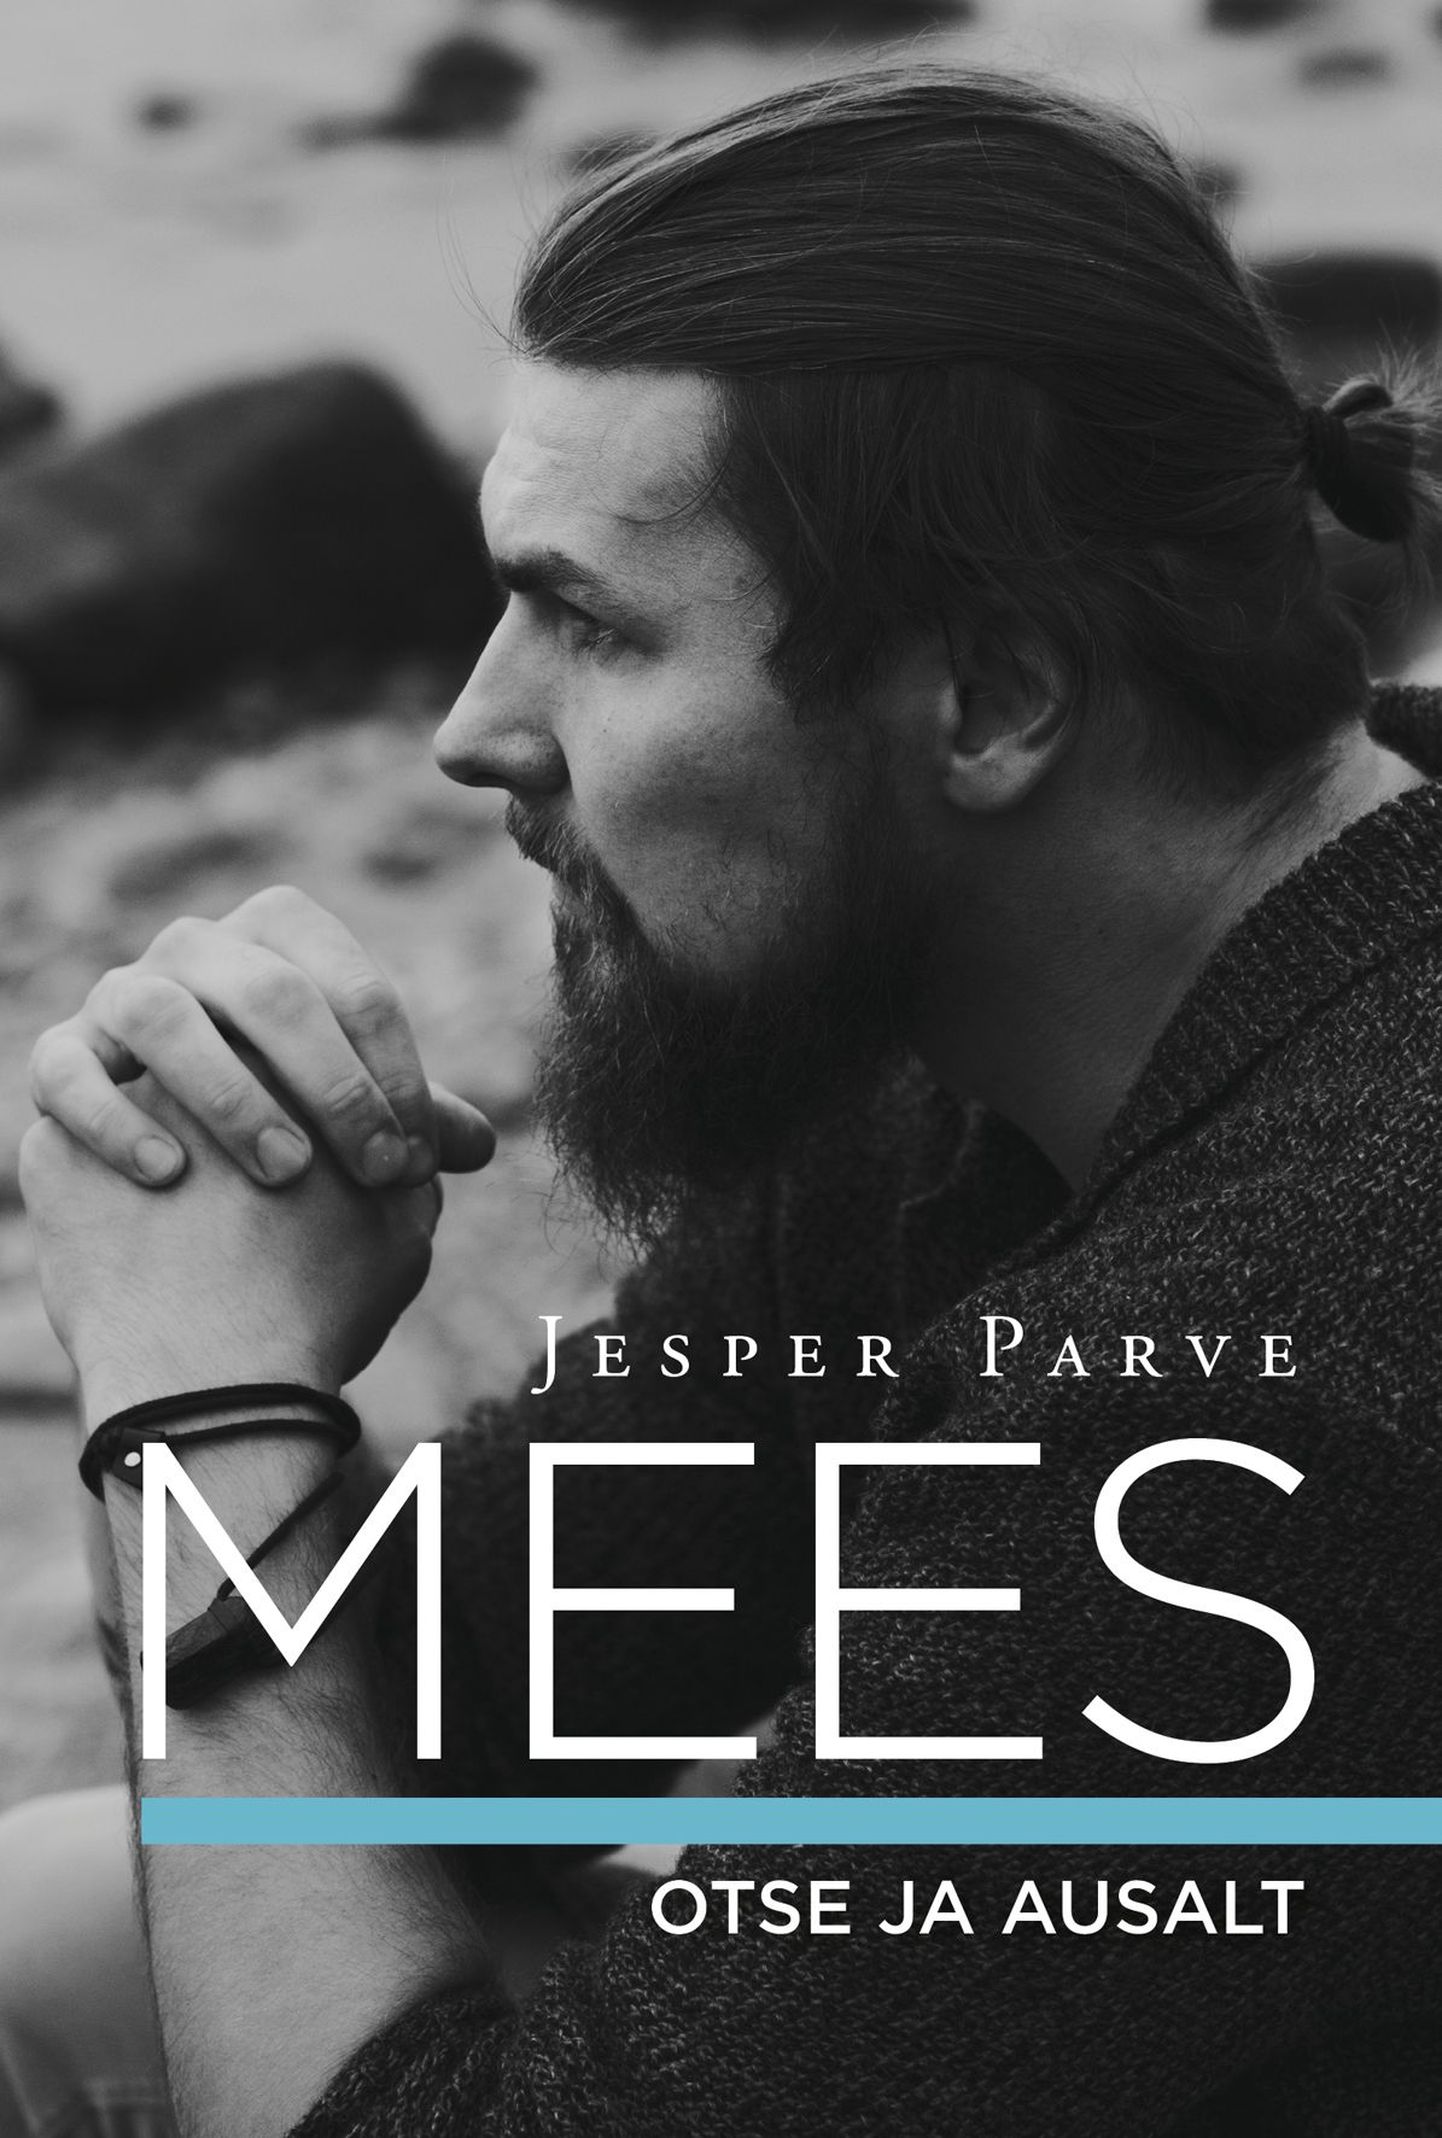 Jesper Parve «Mees»